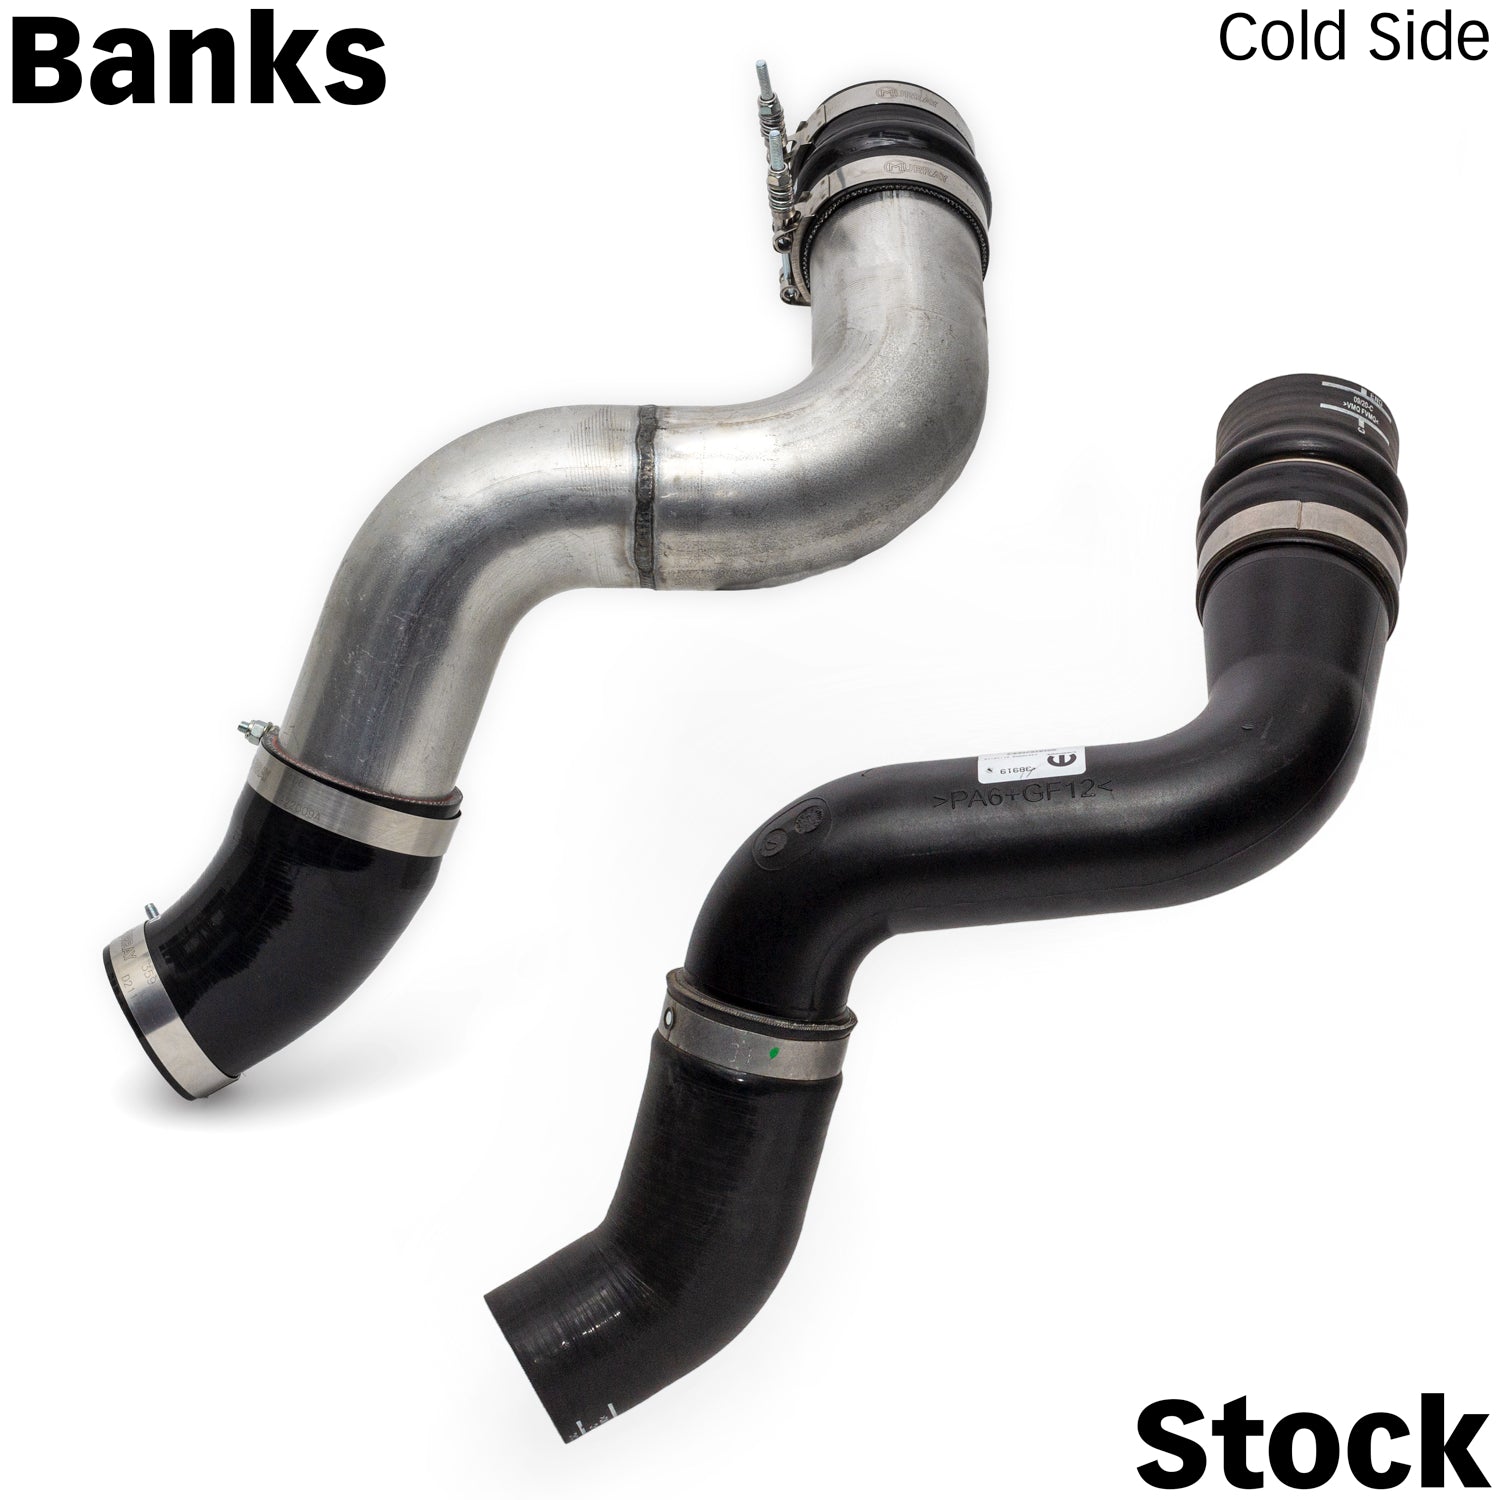 Banks vs Stock Cold Side Boost Tube Comparison for 2019+ Ram 2500/3500 6.7L Natural Finish